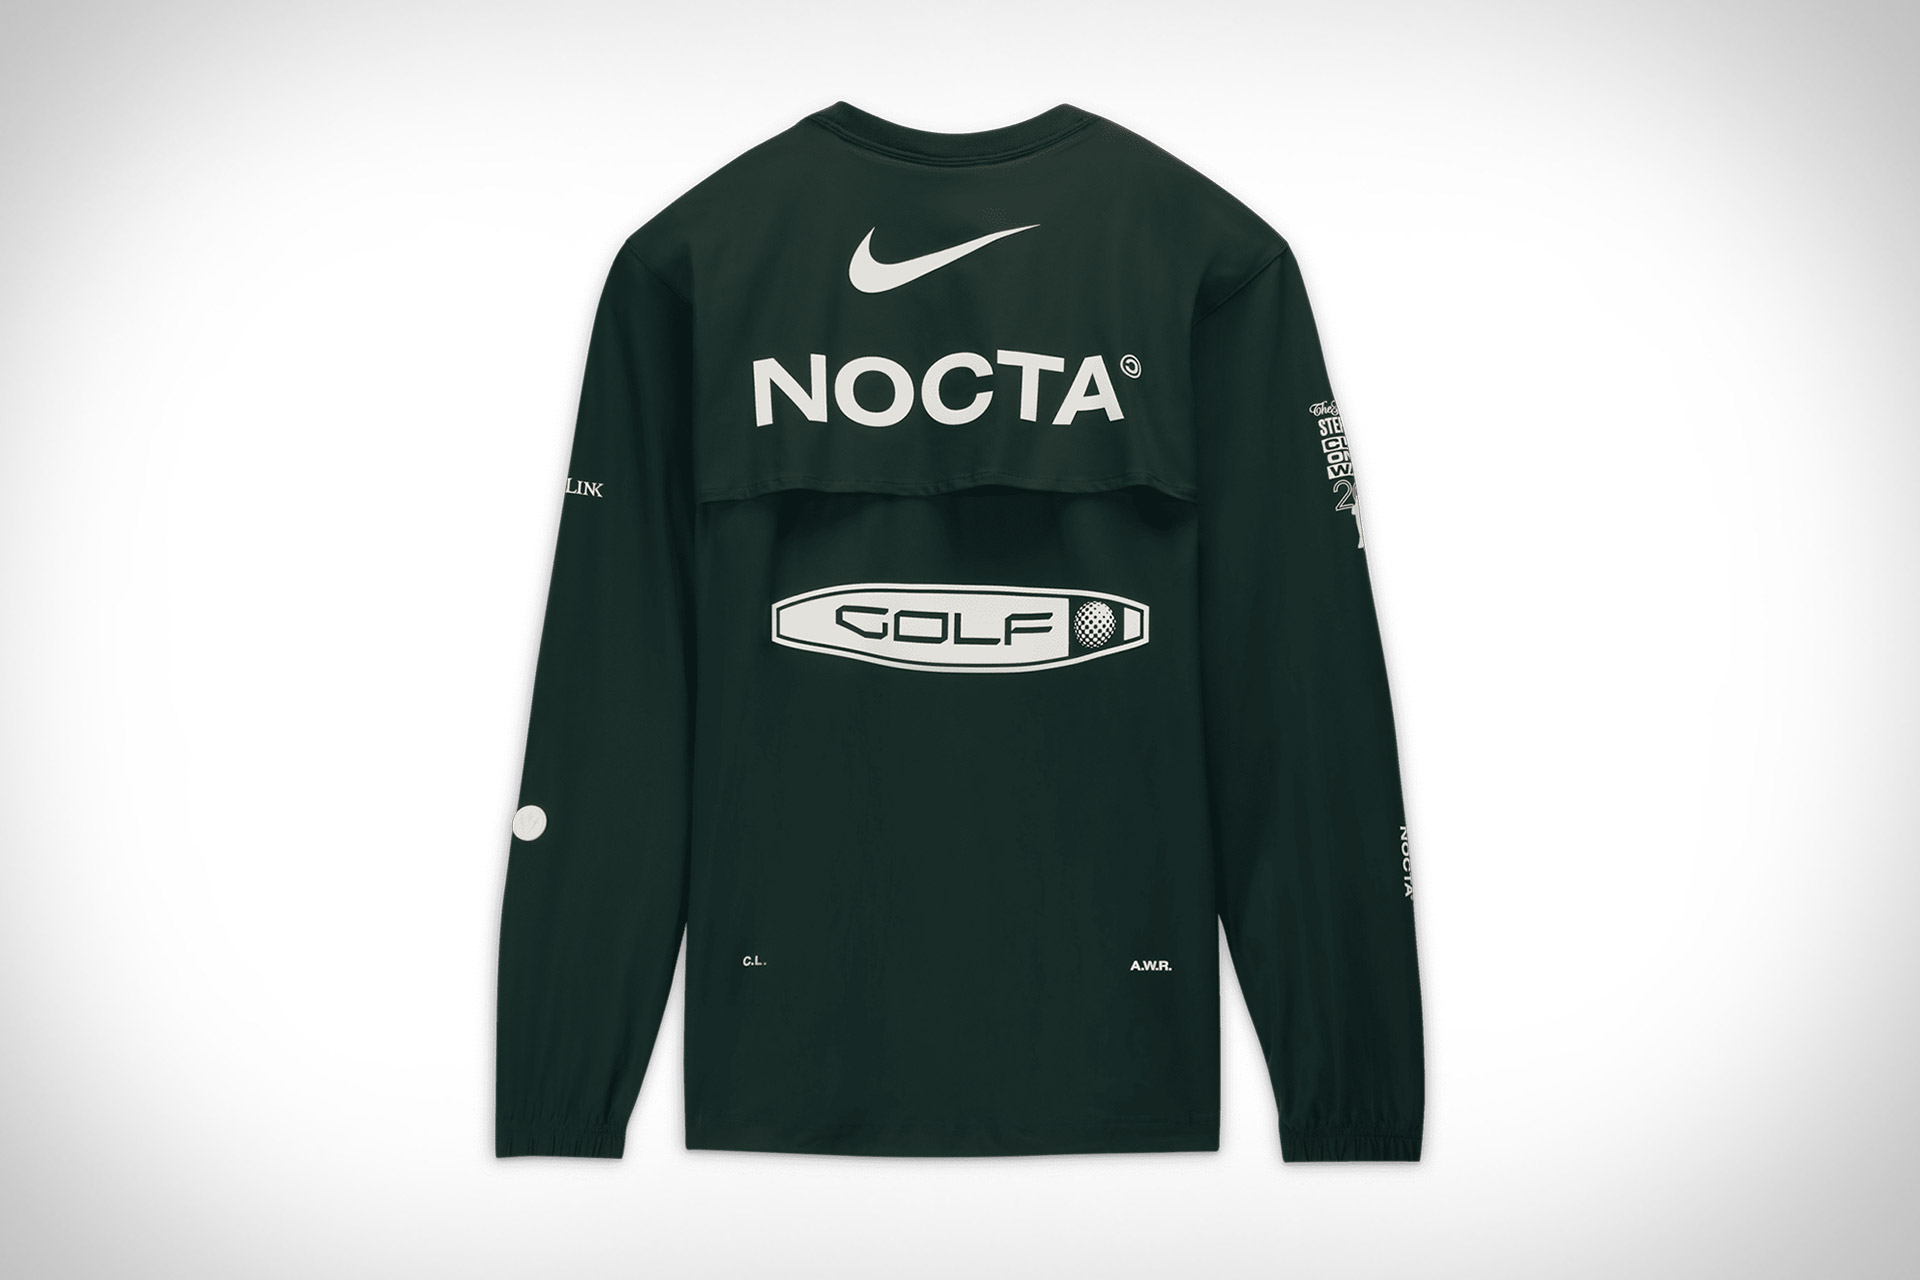 NOCTA Golf Collection | Uncrate